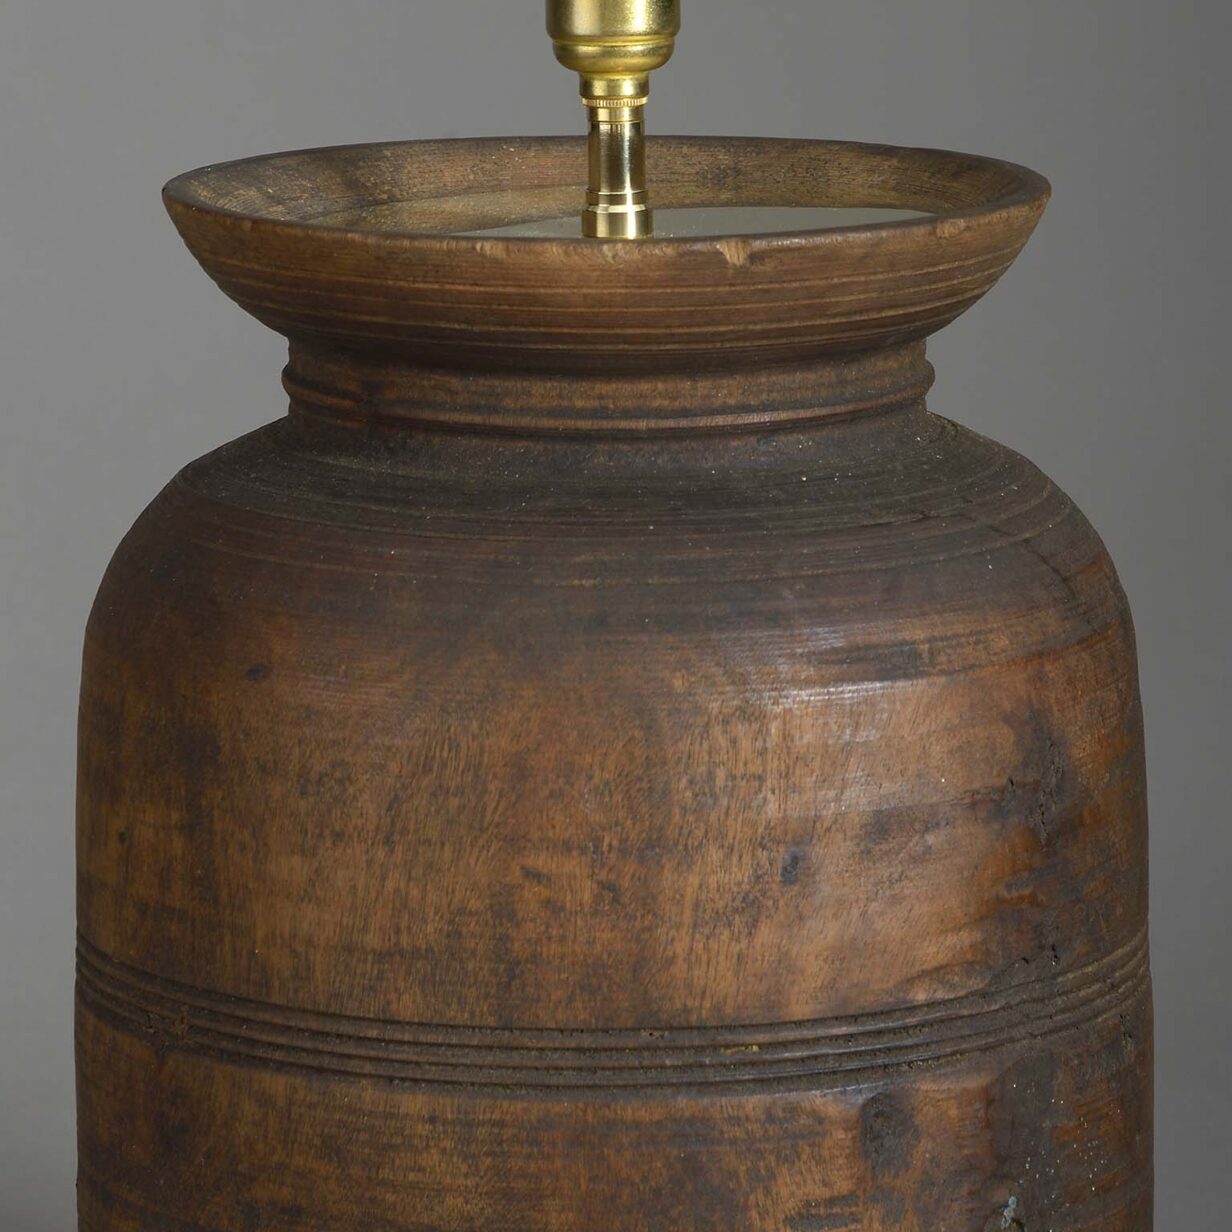 Early 20th century turned wooden tekhi jar lamp